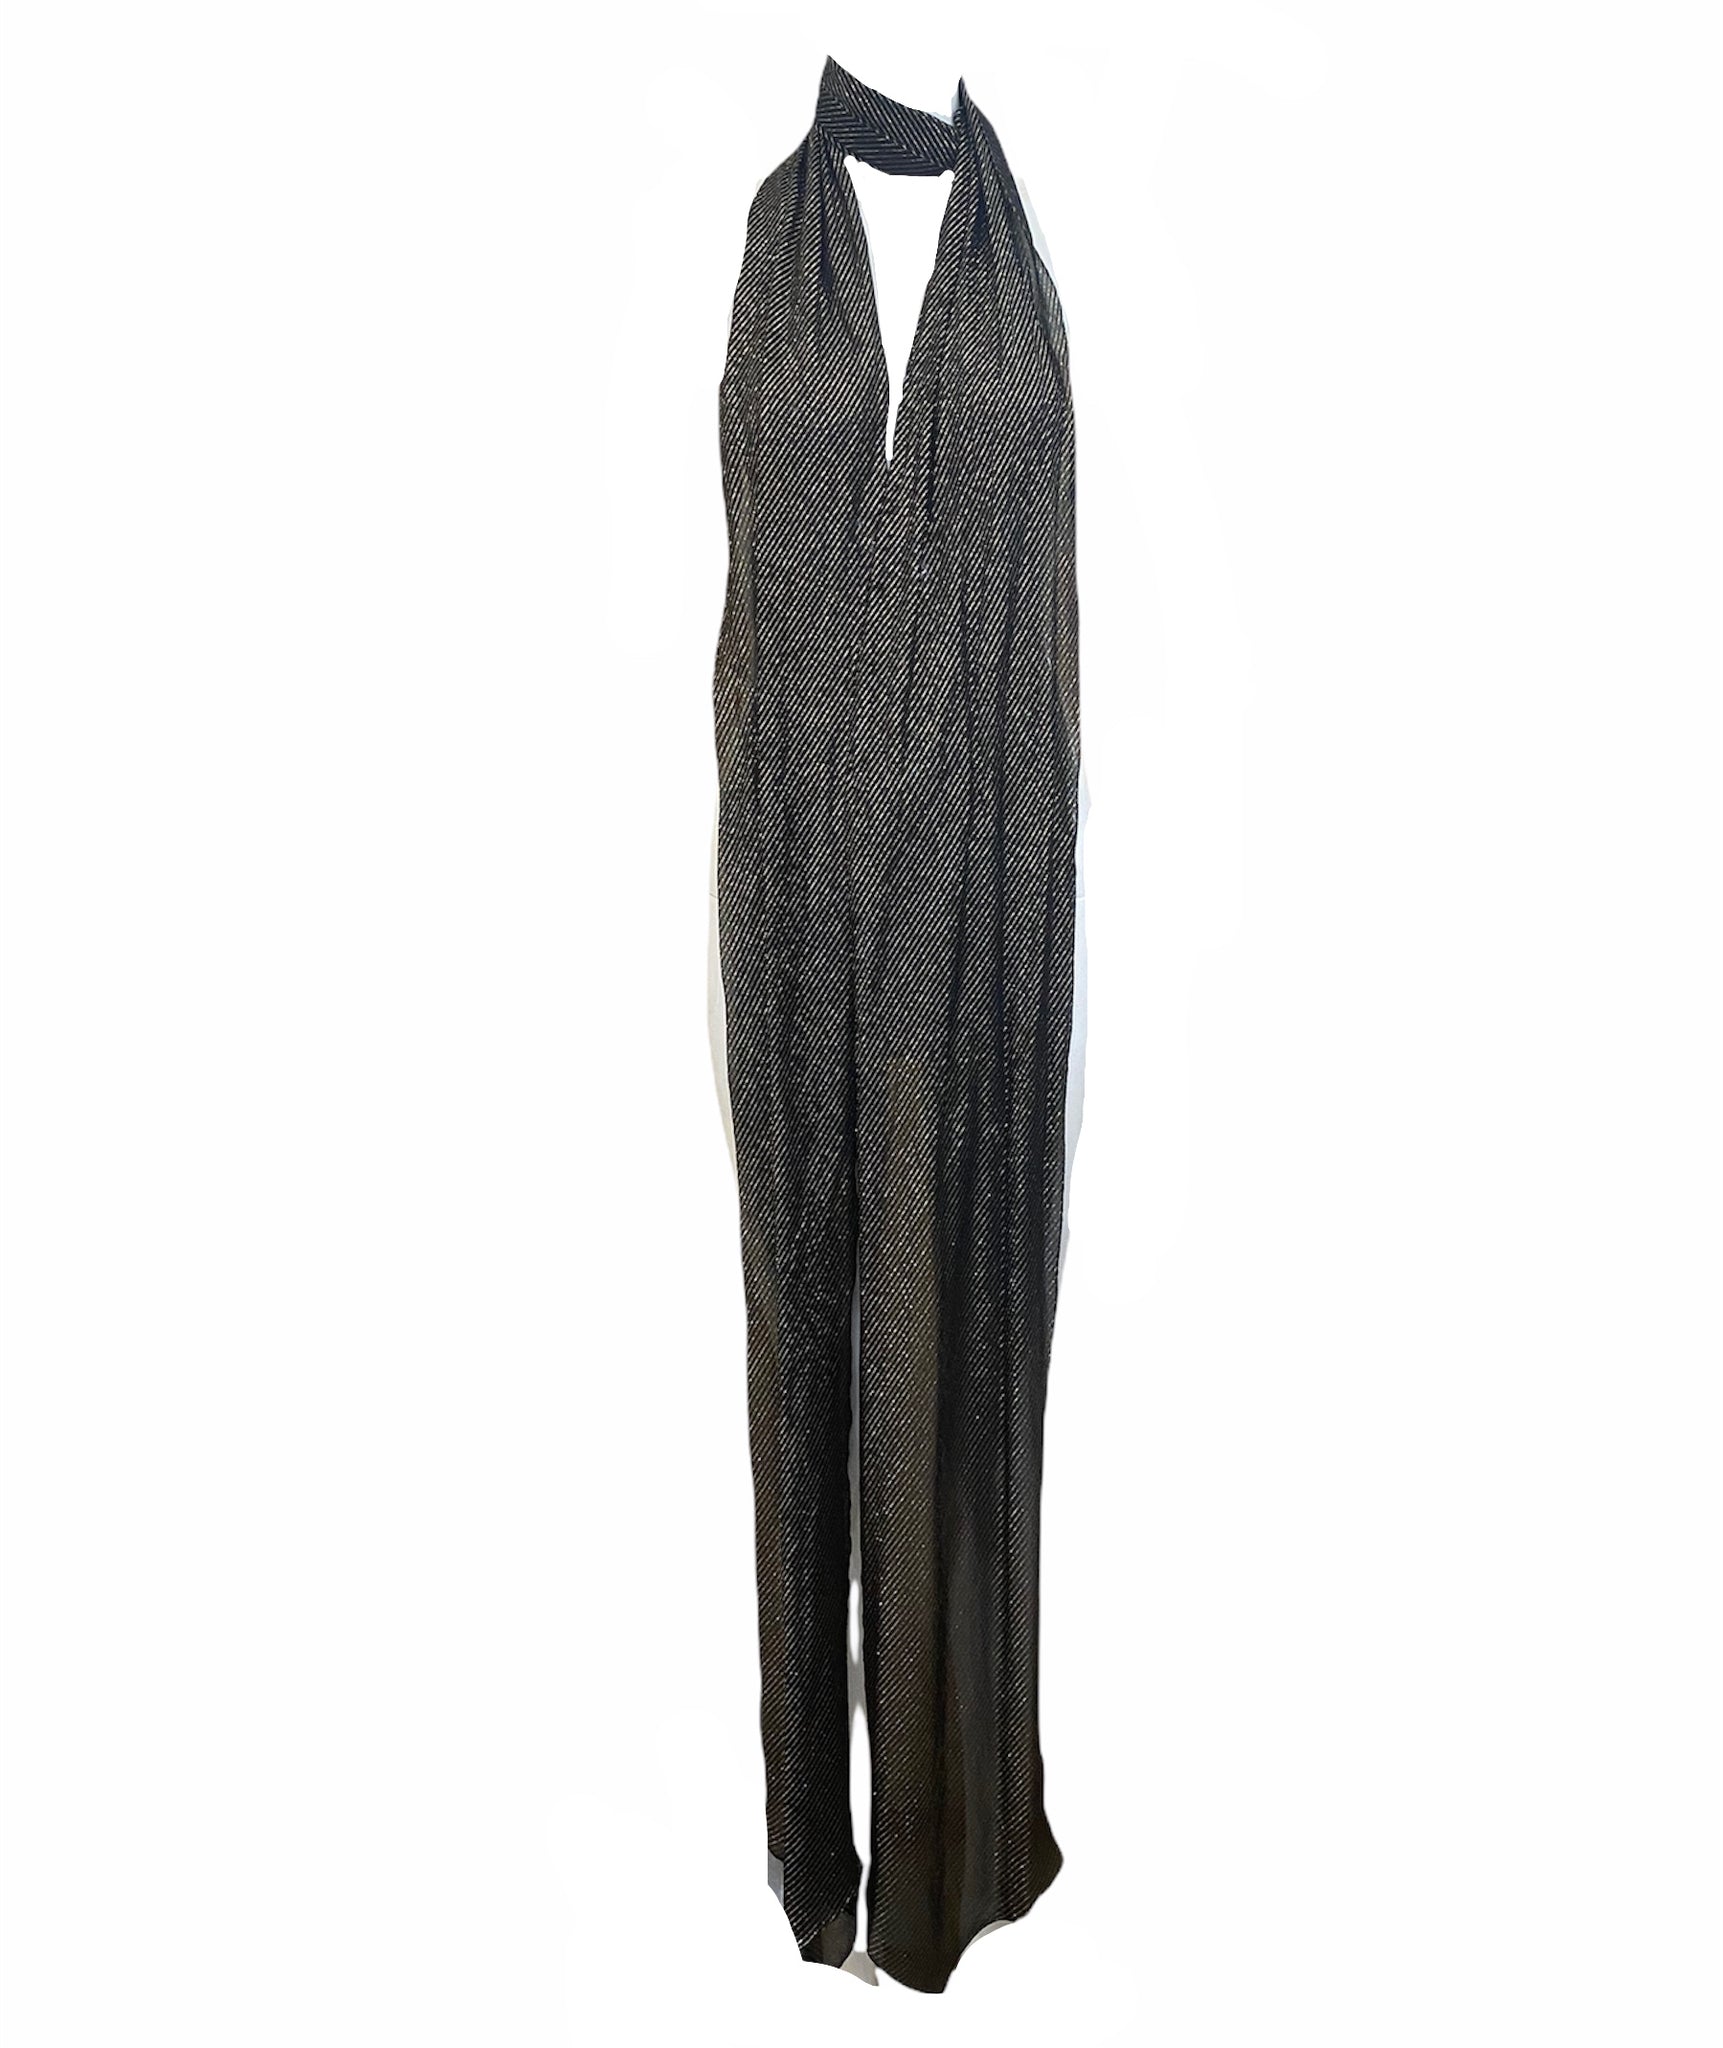 Ungaro 70s Strapless Metallic Stripe Dress SCARF 4 of 5